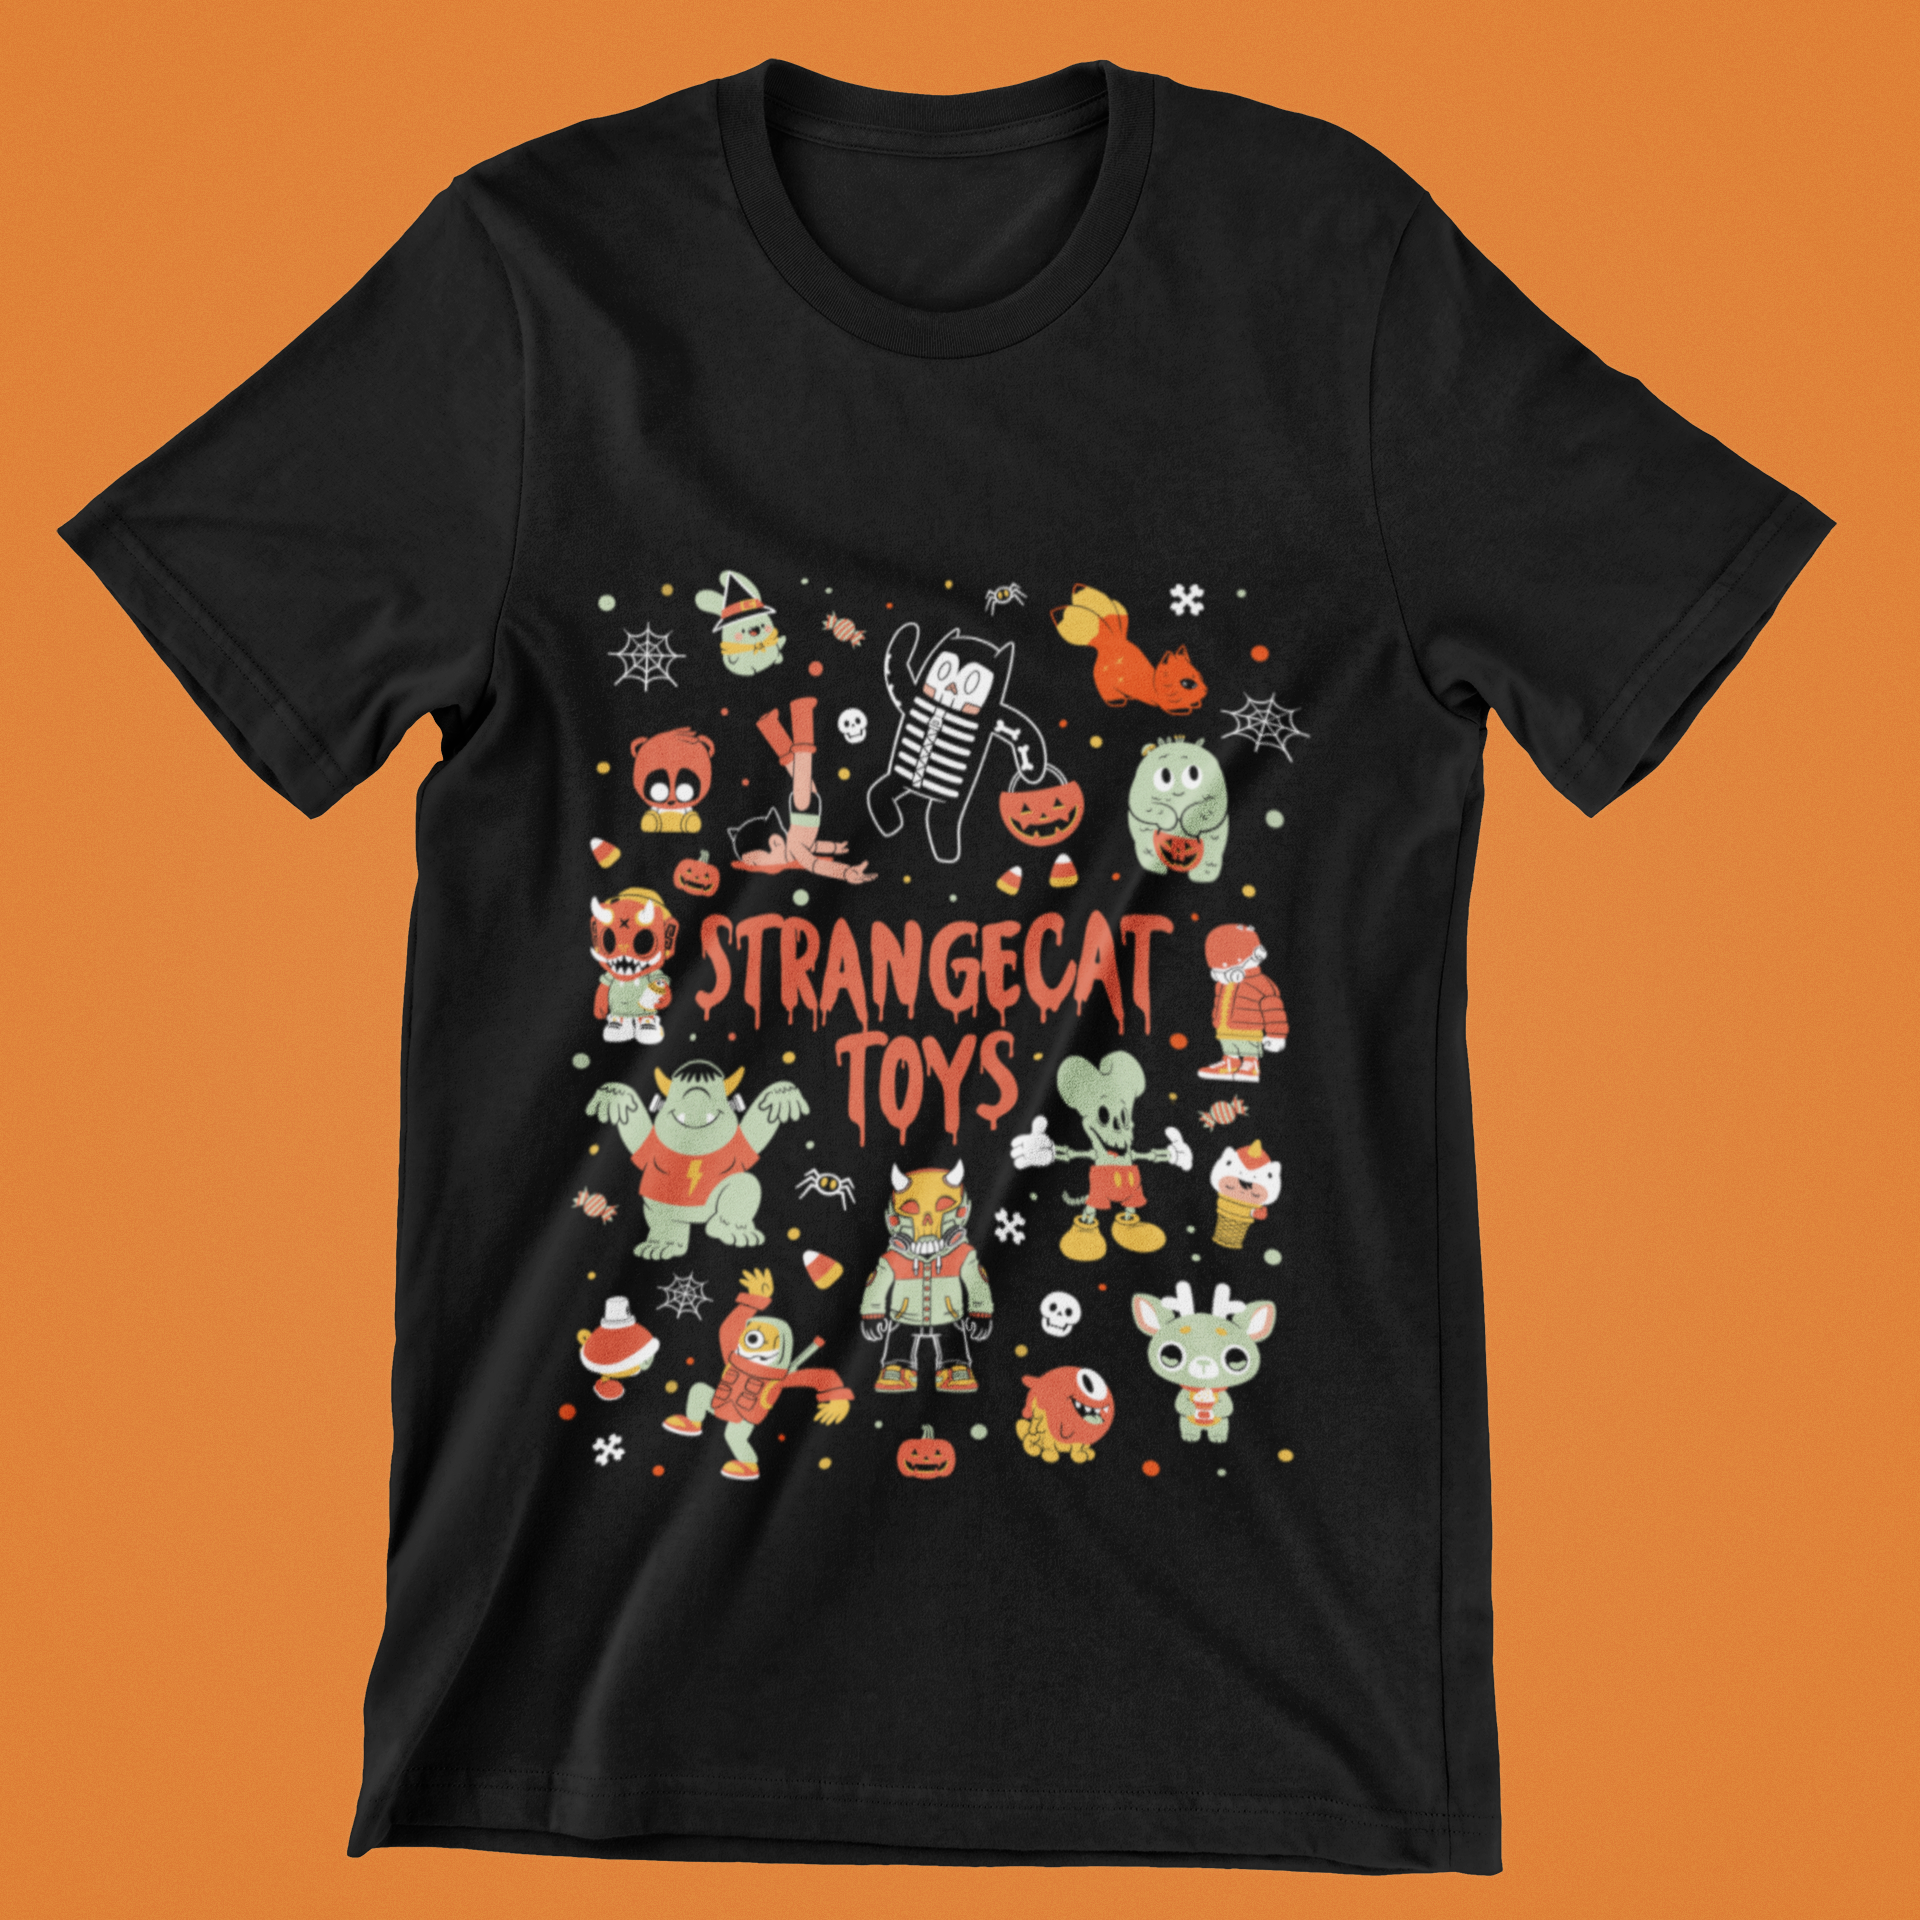 Strangecat Halloween Shirt by Prime